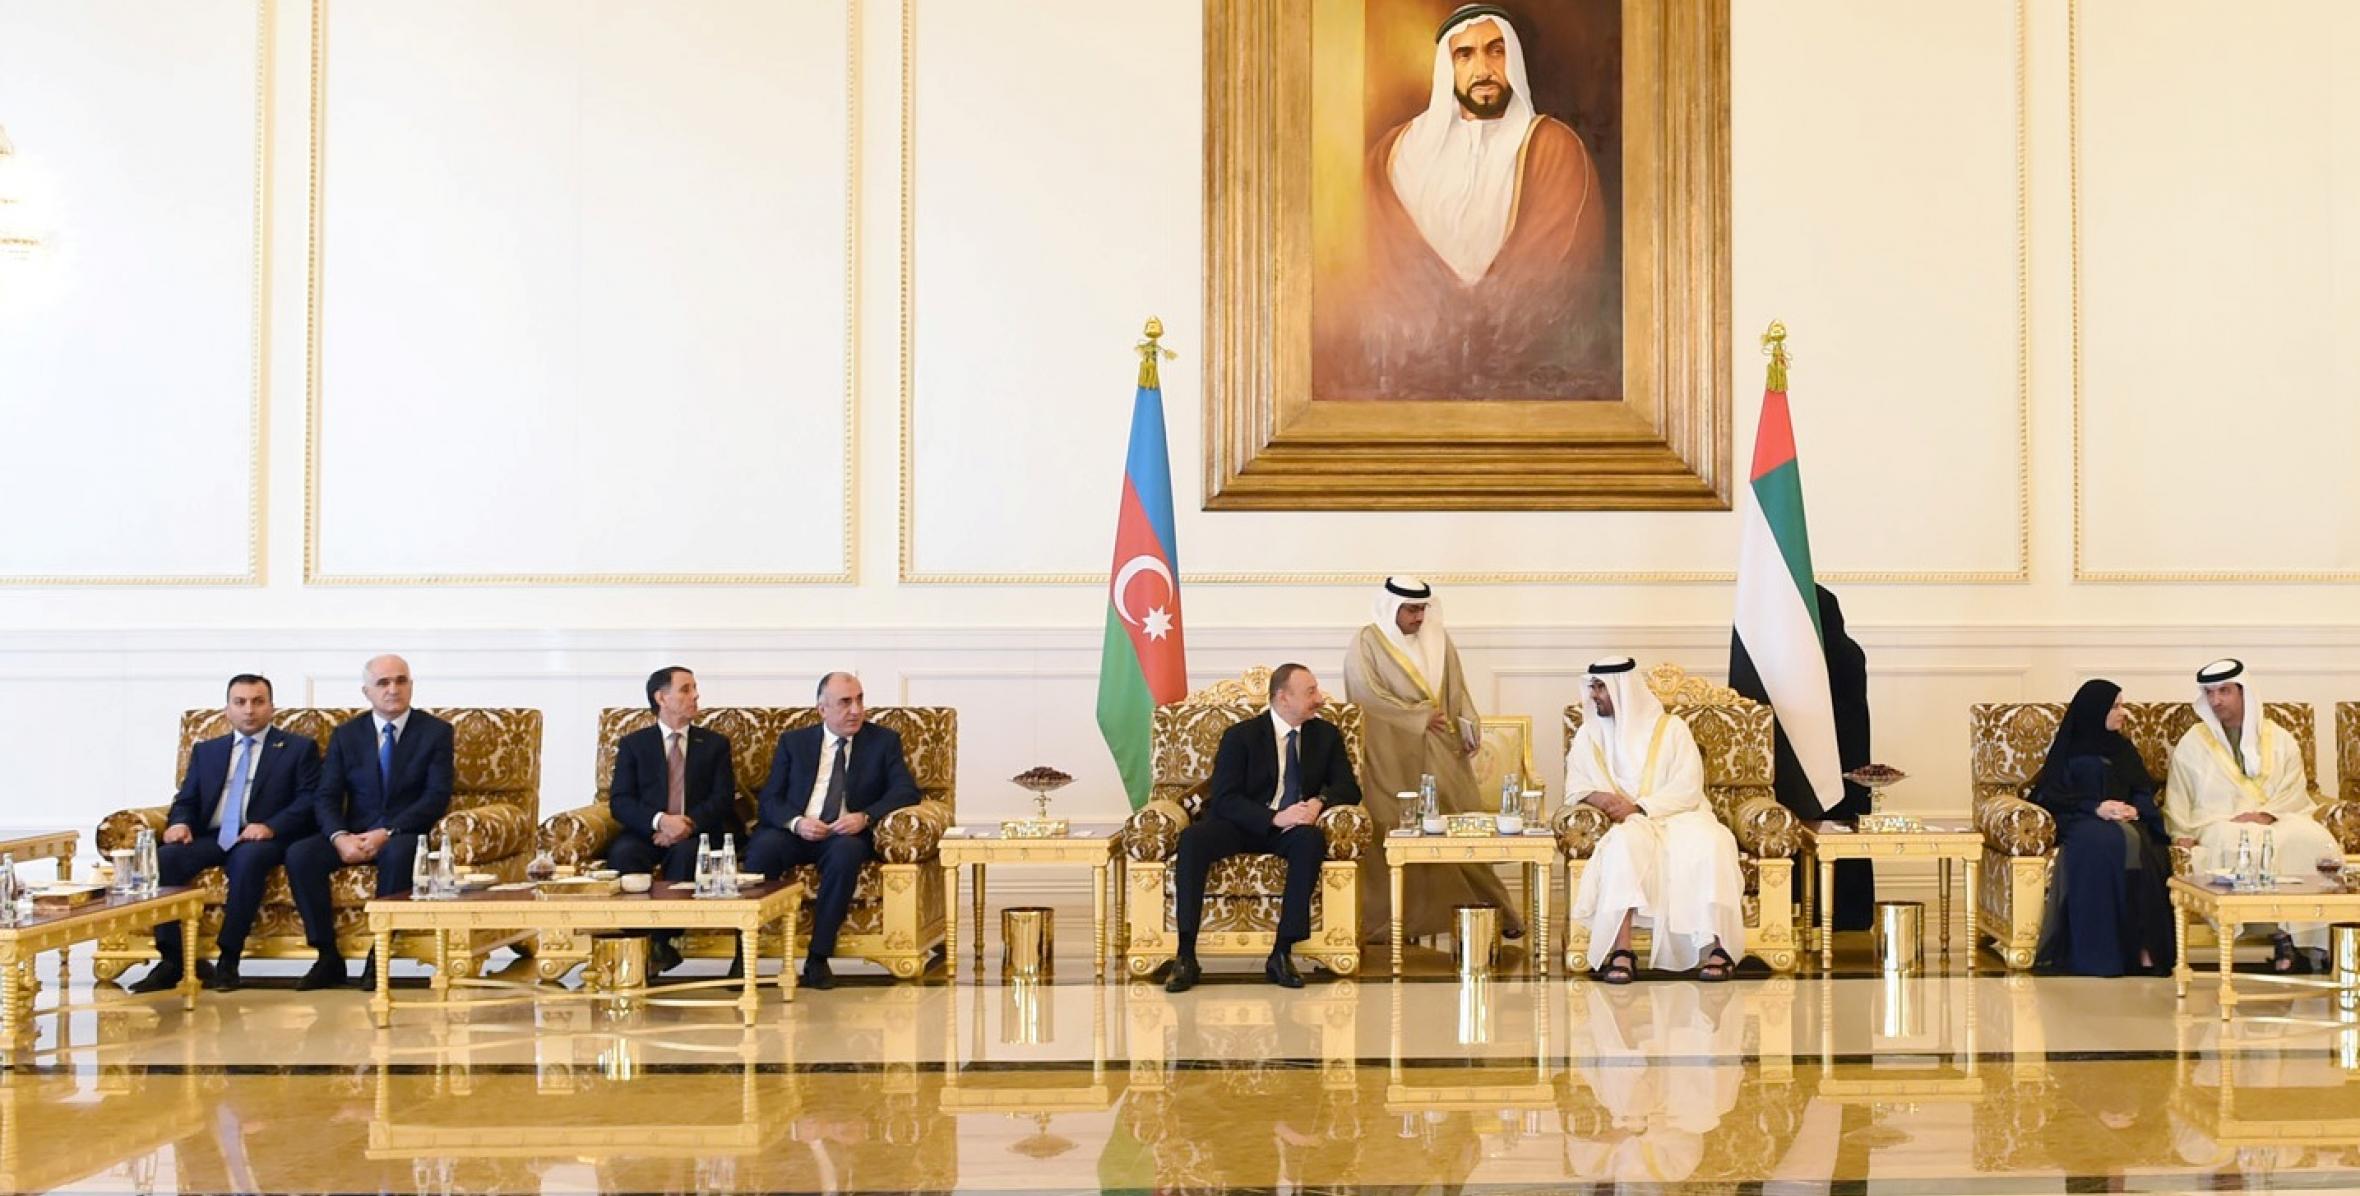 Ilham Aliyev and Crown Prince of Abu Dhabi held an expanded meeting